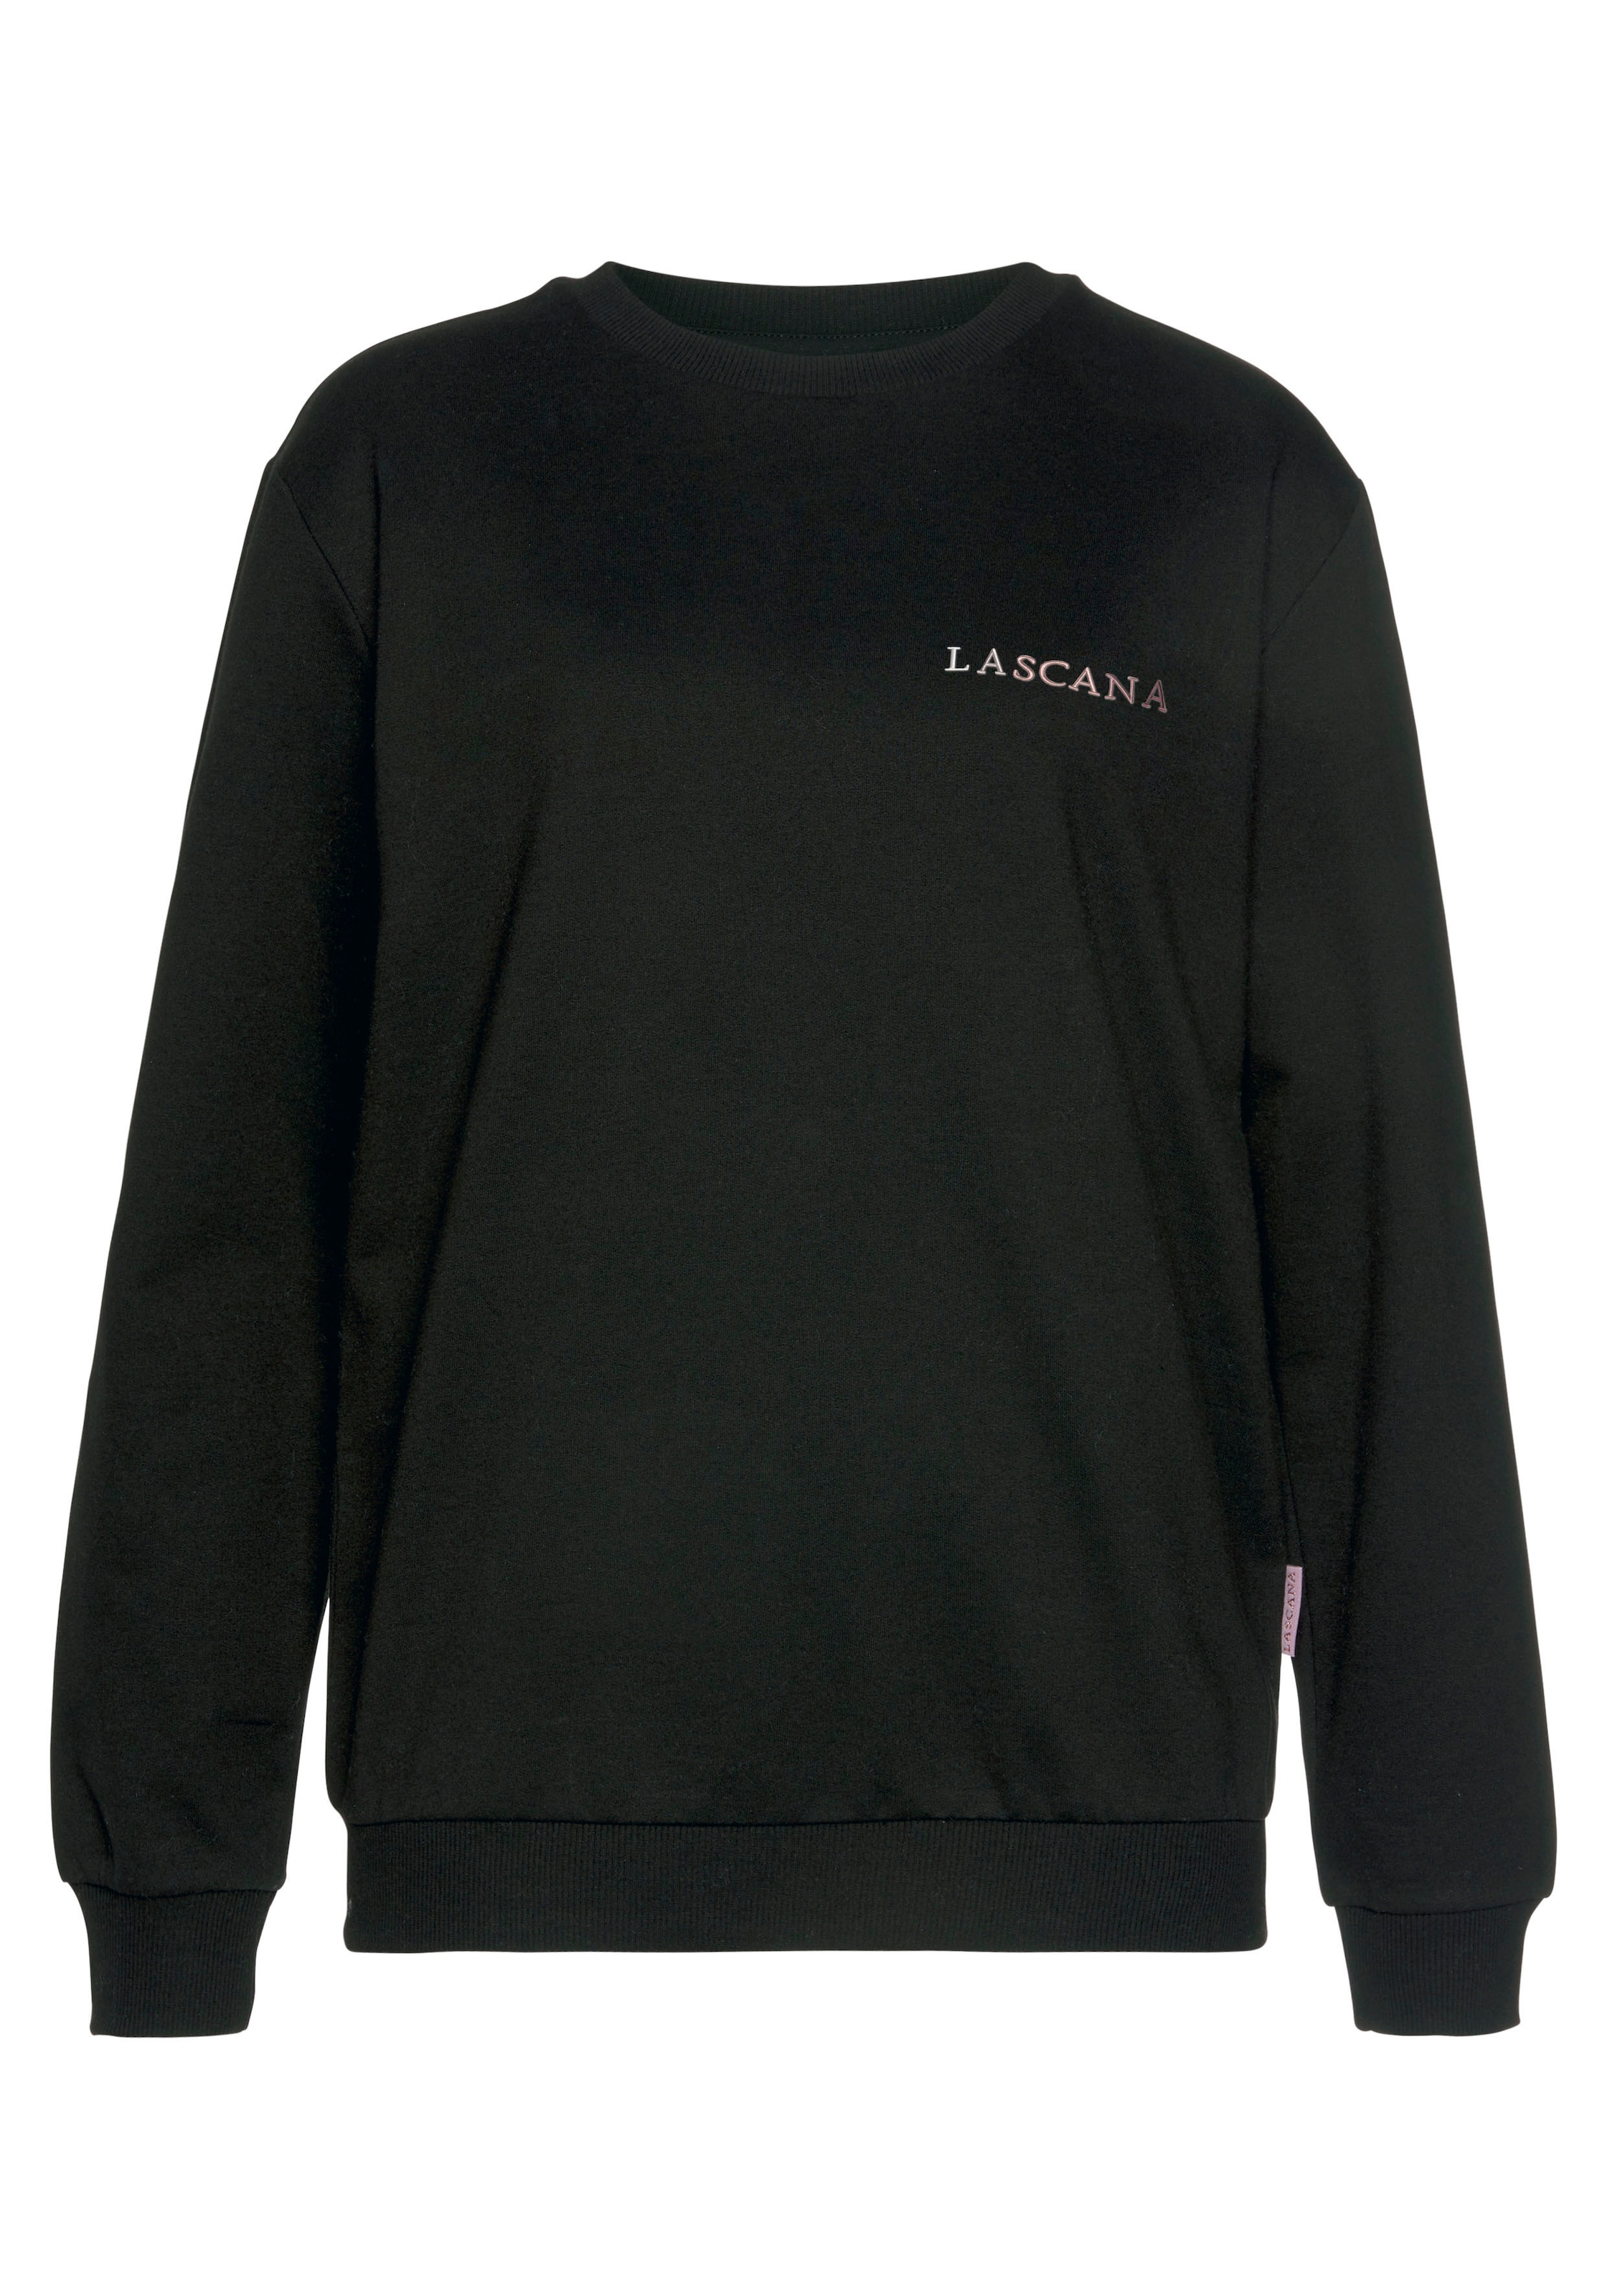 LASCANA Sweatshirt, Loungeanzug